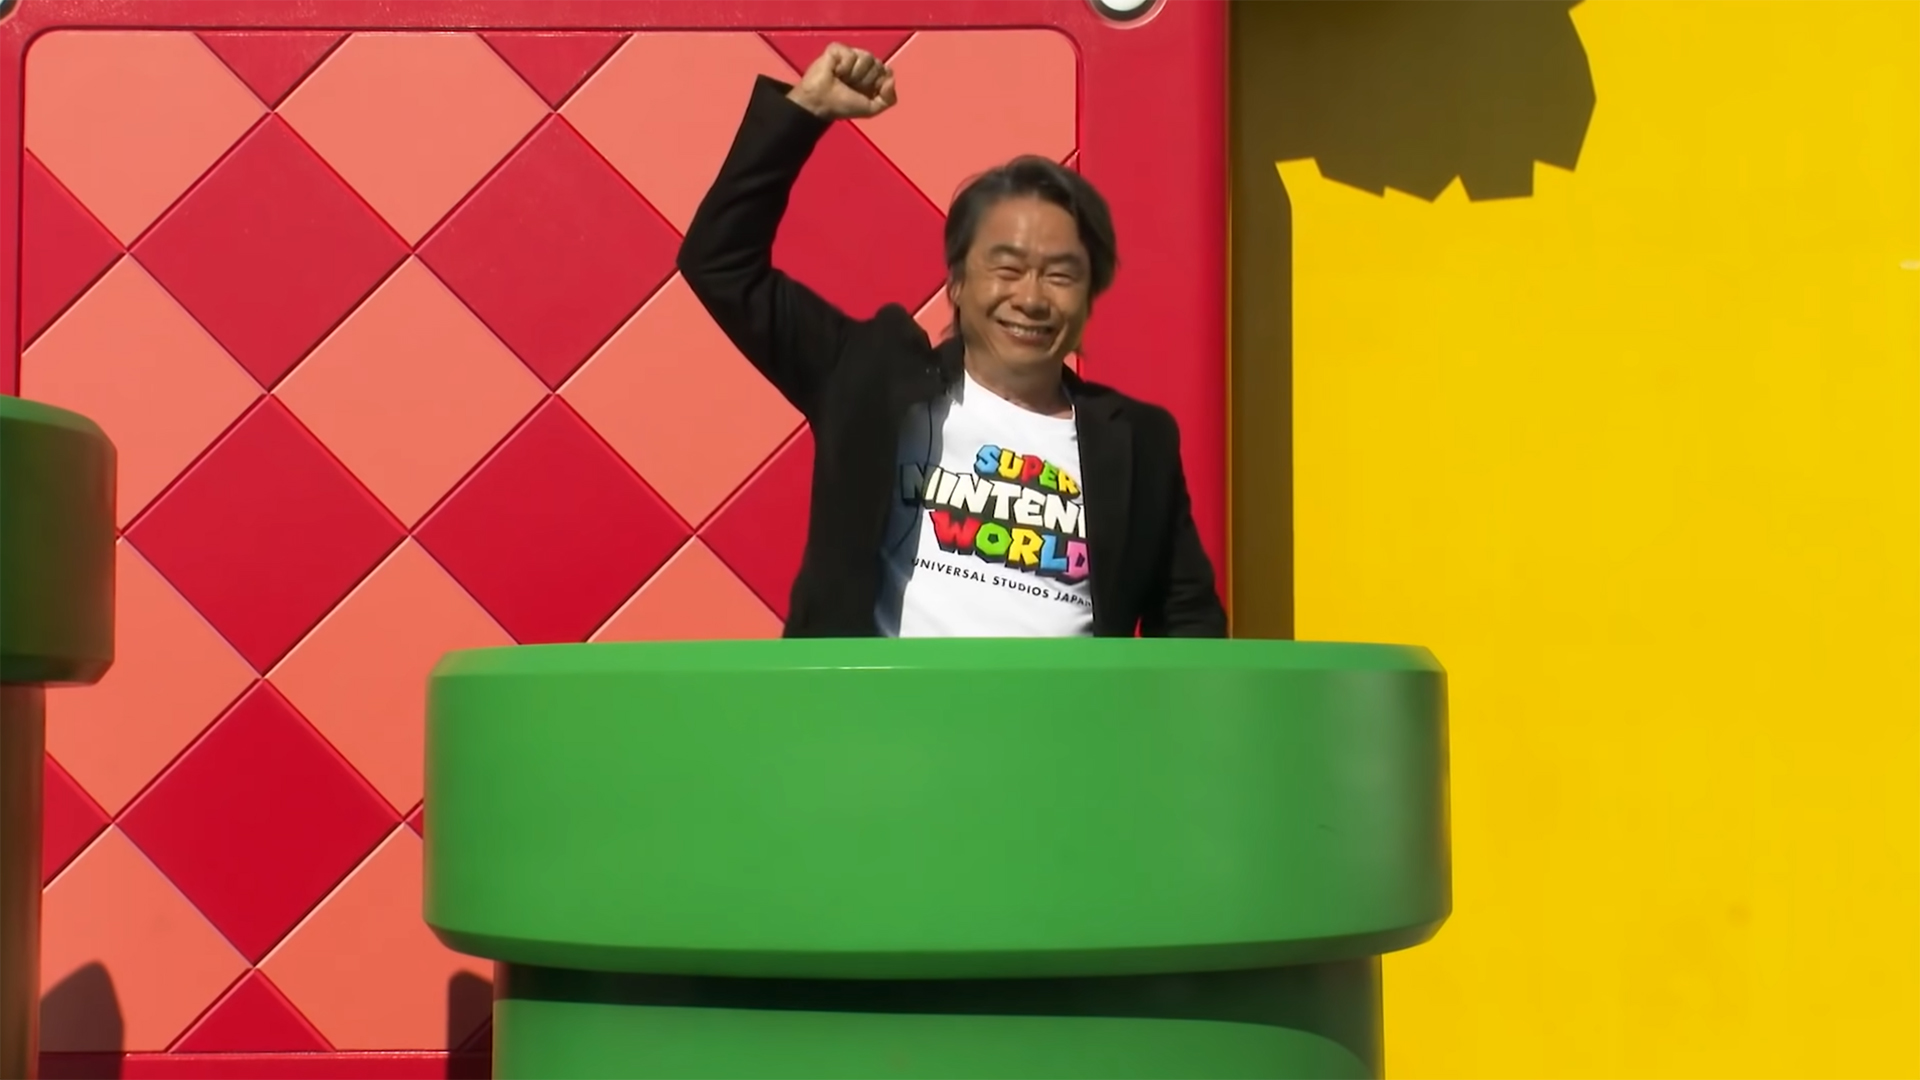 Start - Gratidão pelas obras do mestre Shigeru Miyamoto!